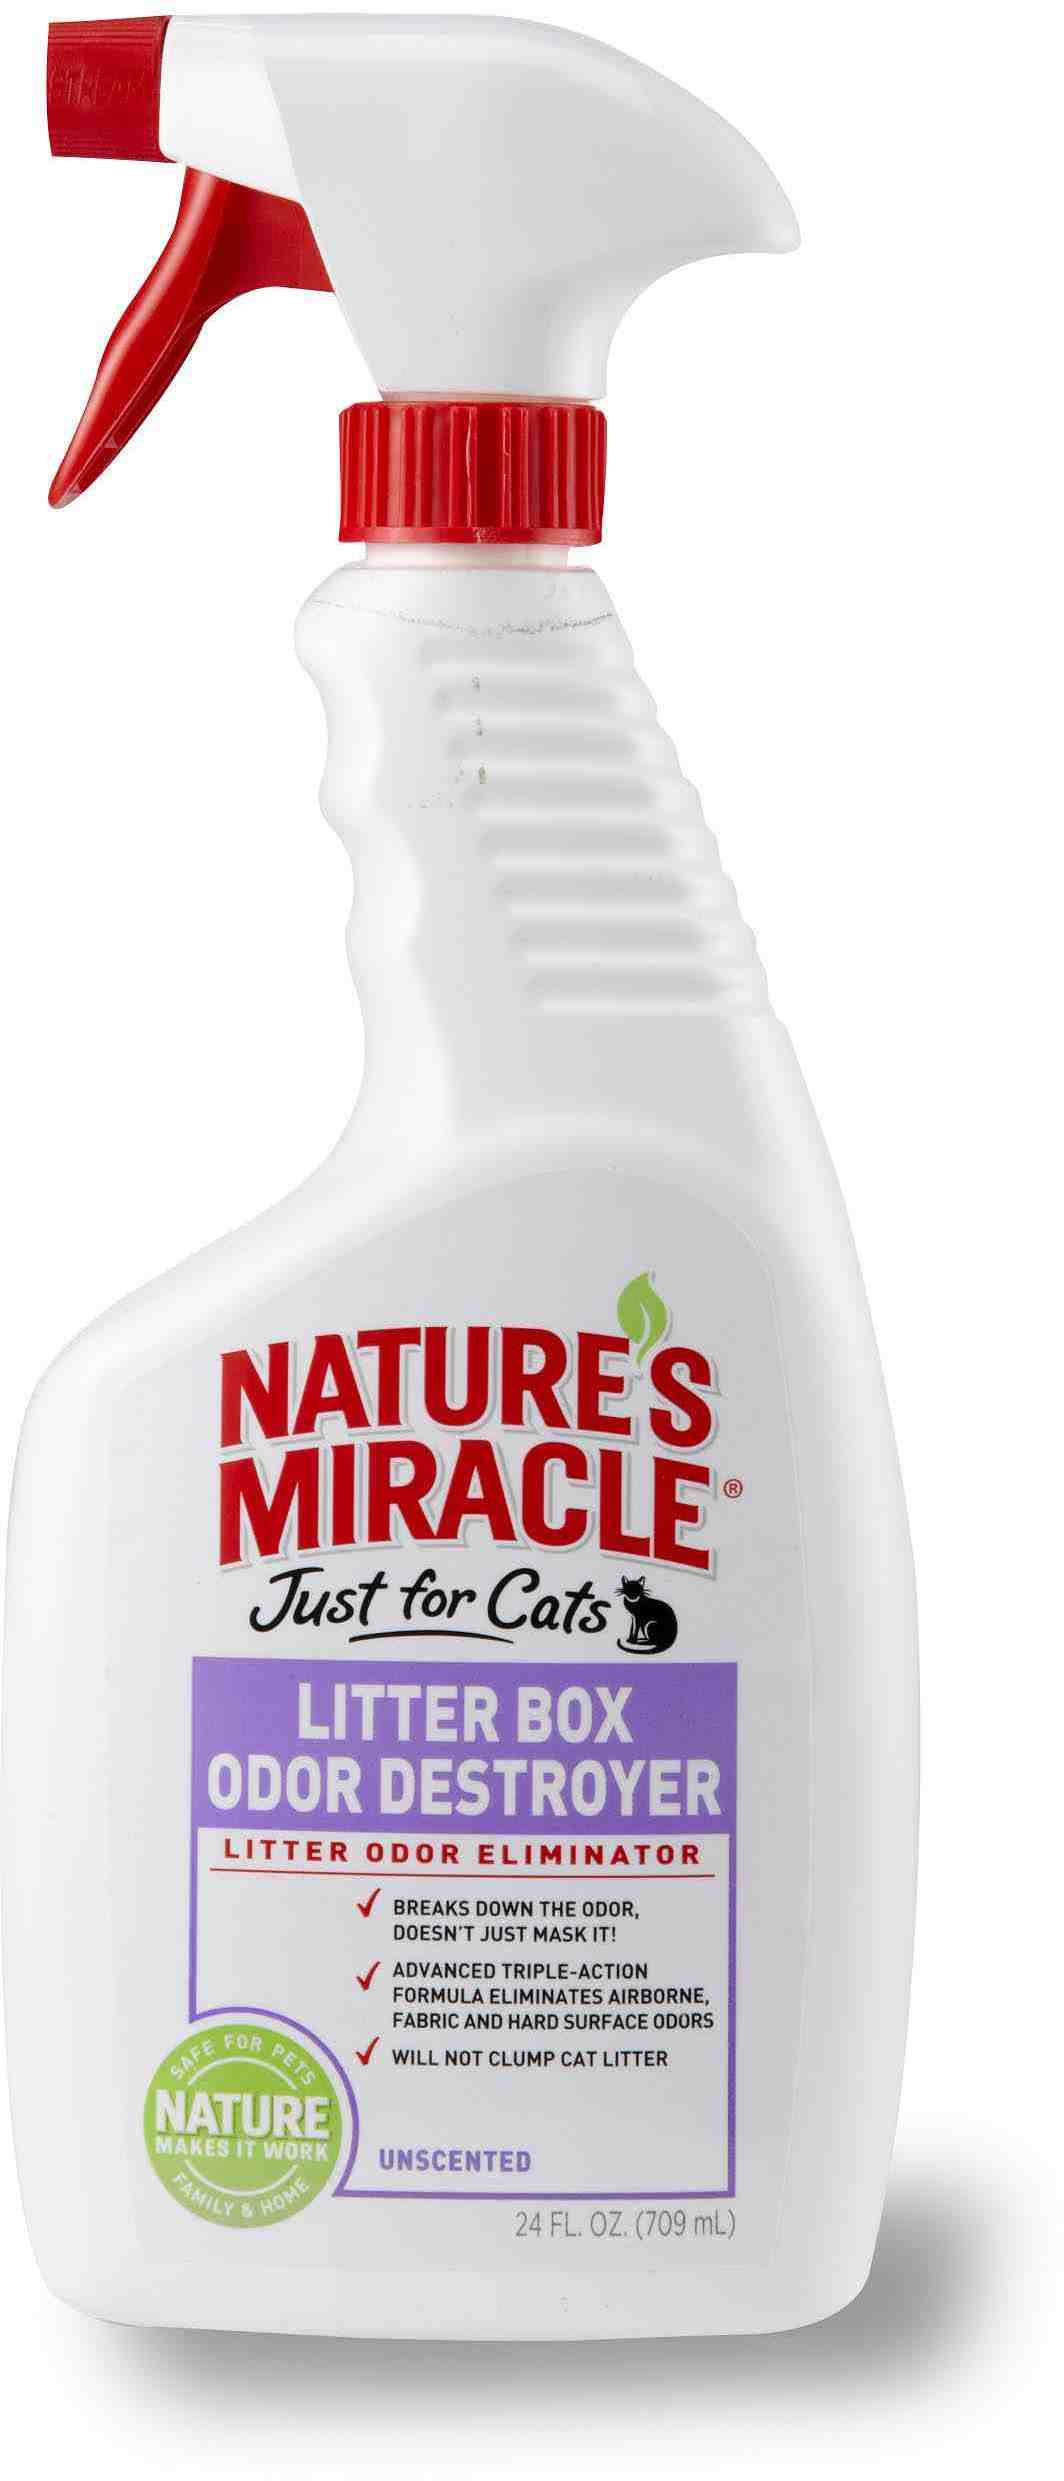 Спрей-Уничтожитель 8 in 1 Natures Miracle Litter Box Odor Destroyer запаха в кошачьем туалете 709 мл 1